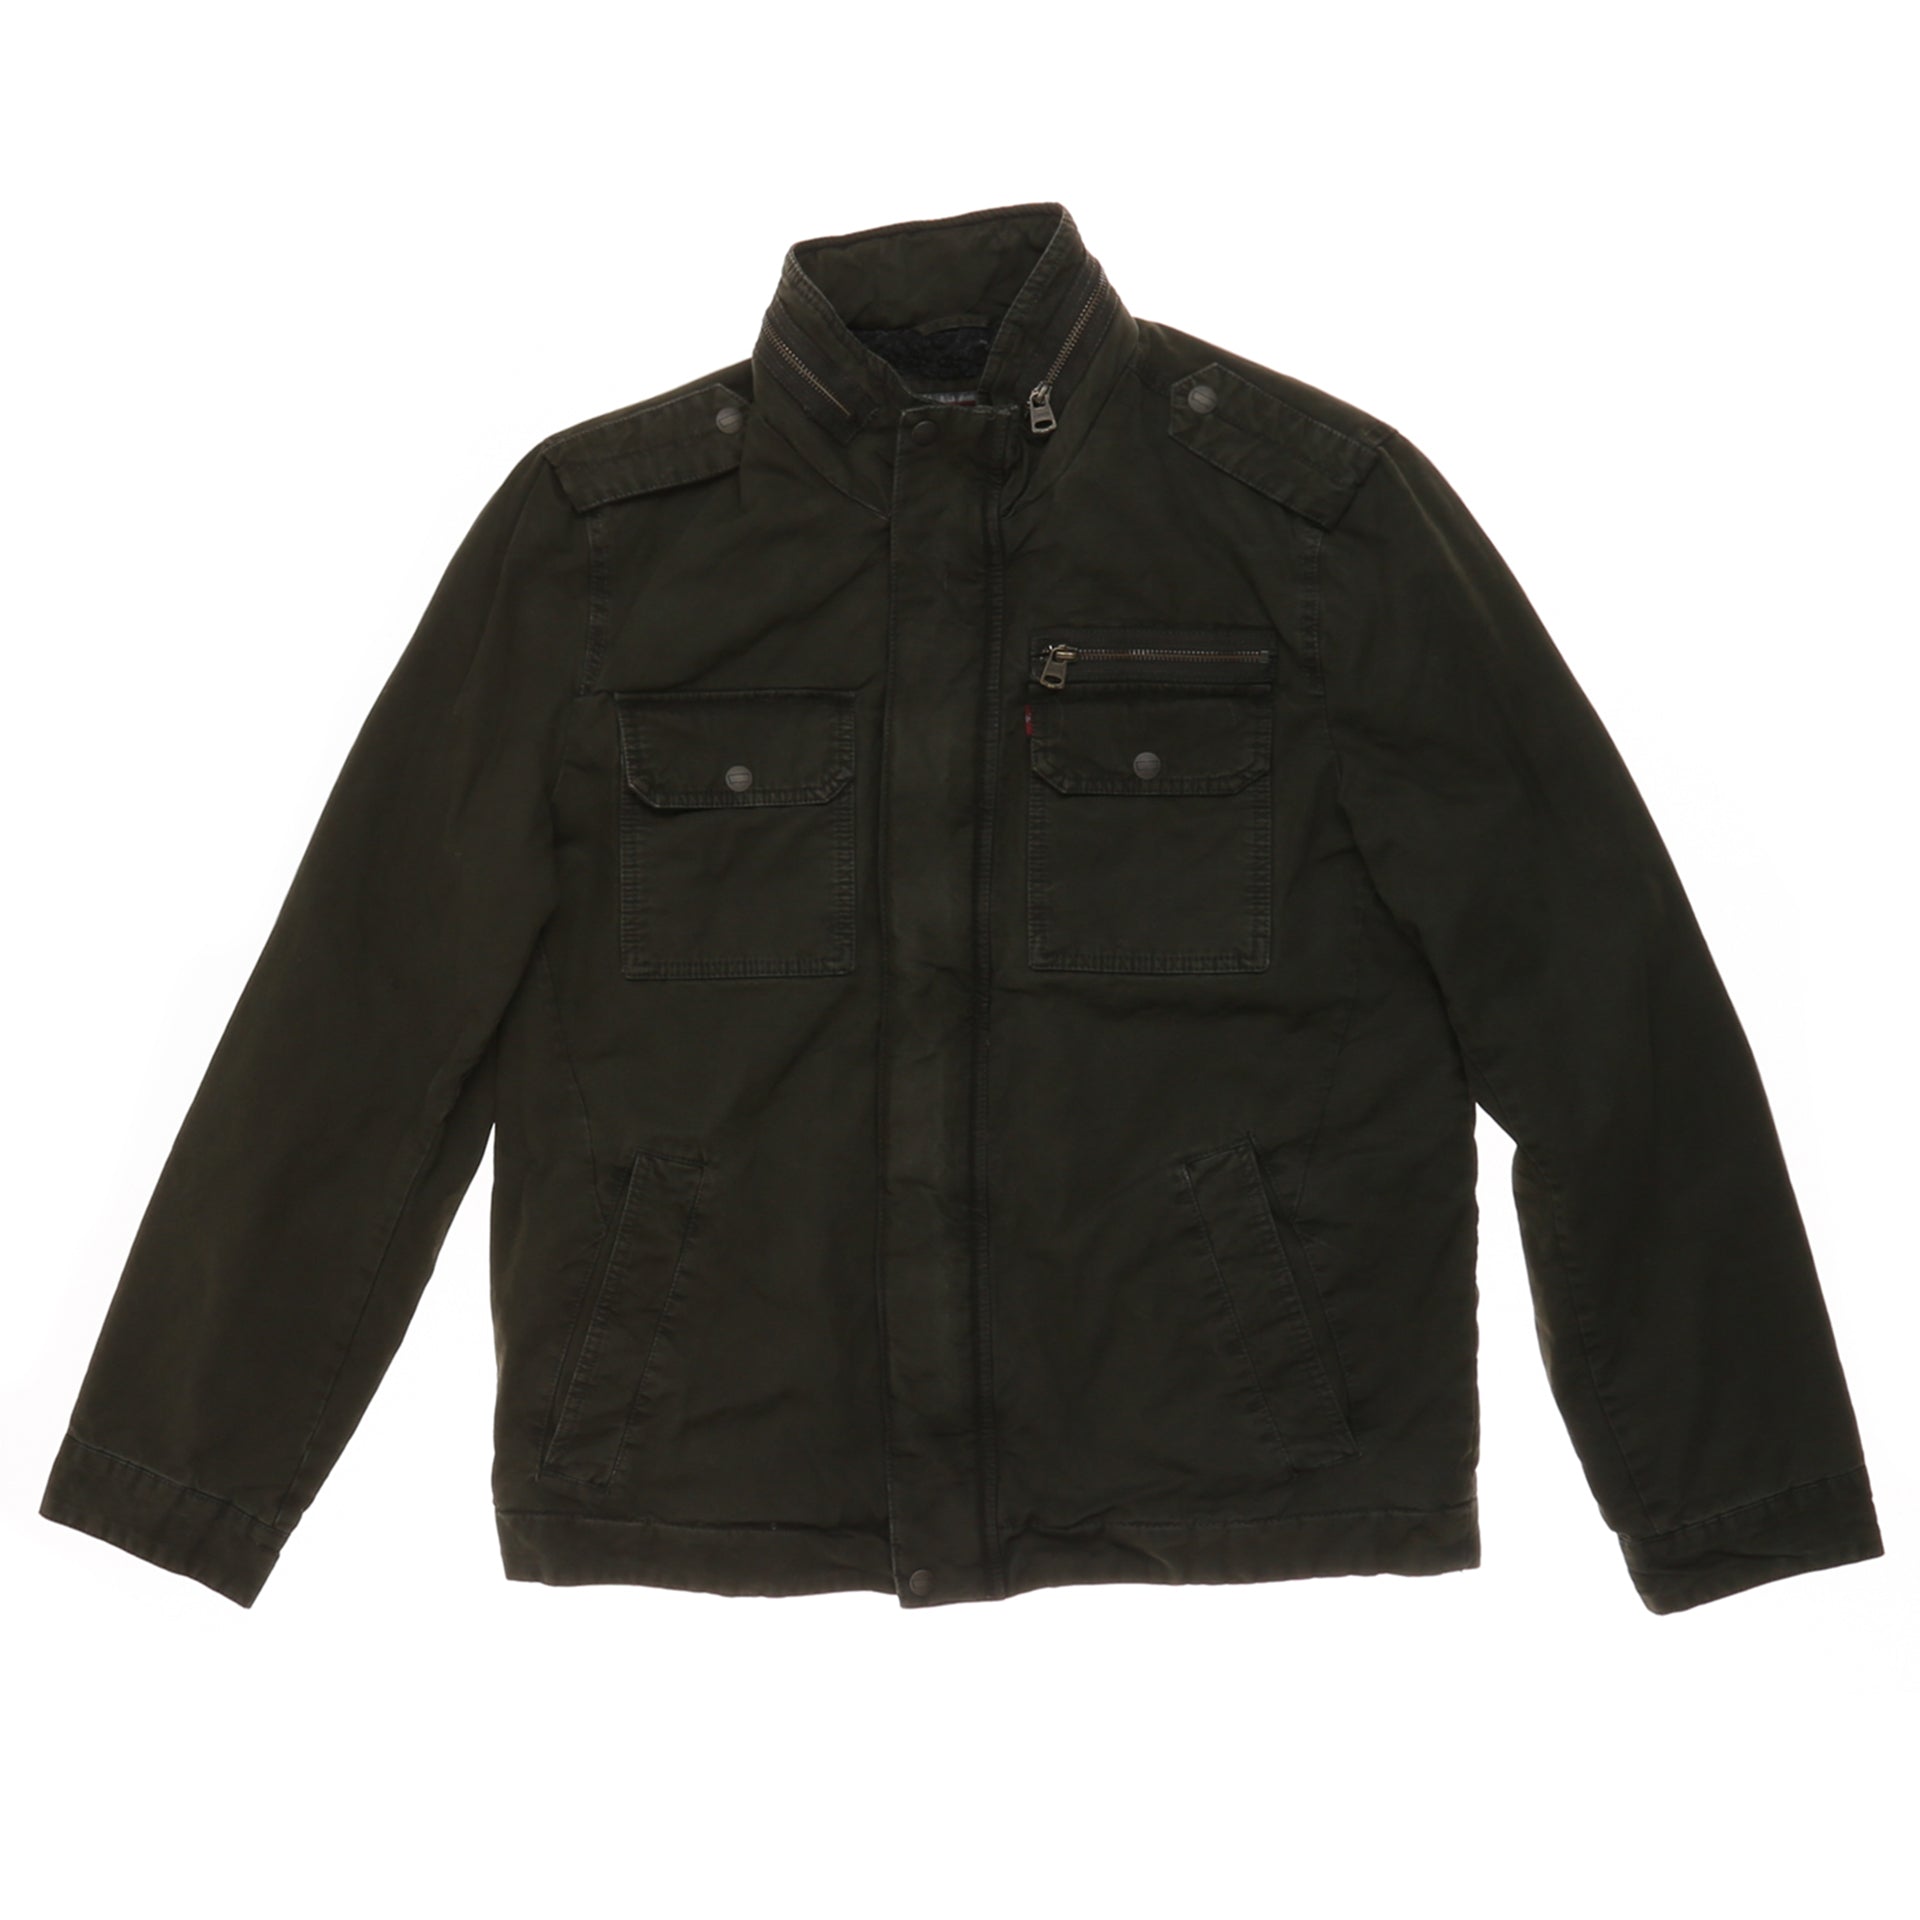 Levi's Men's Washed Cotton Military Jacket